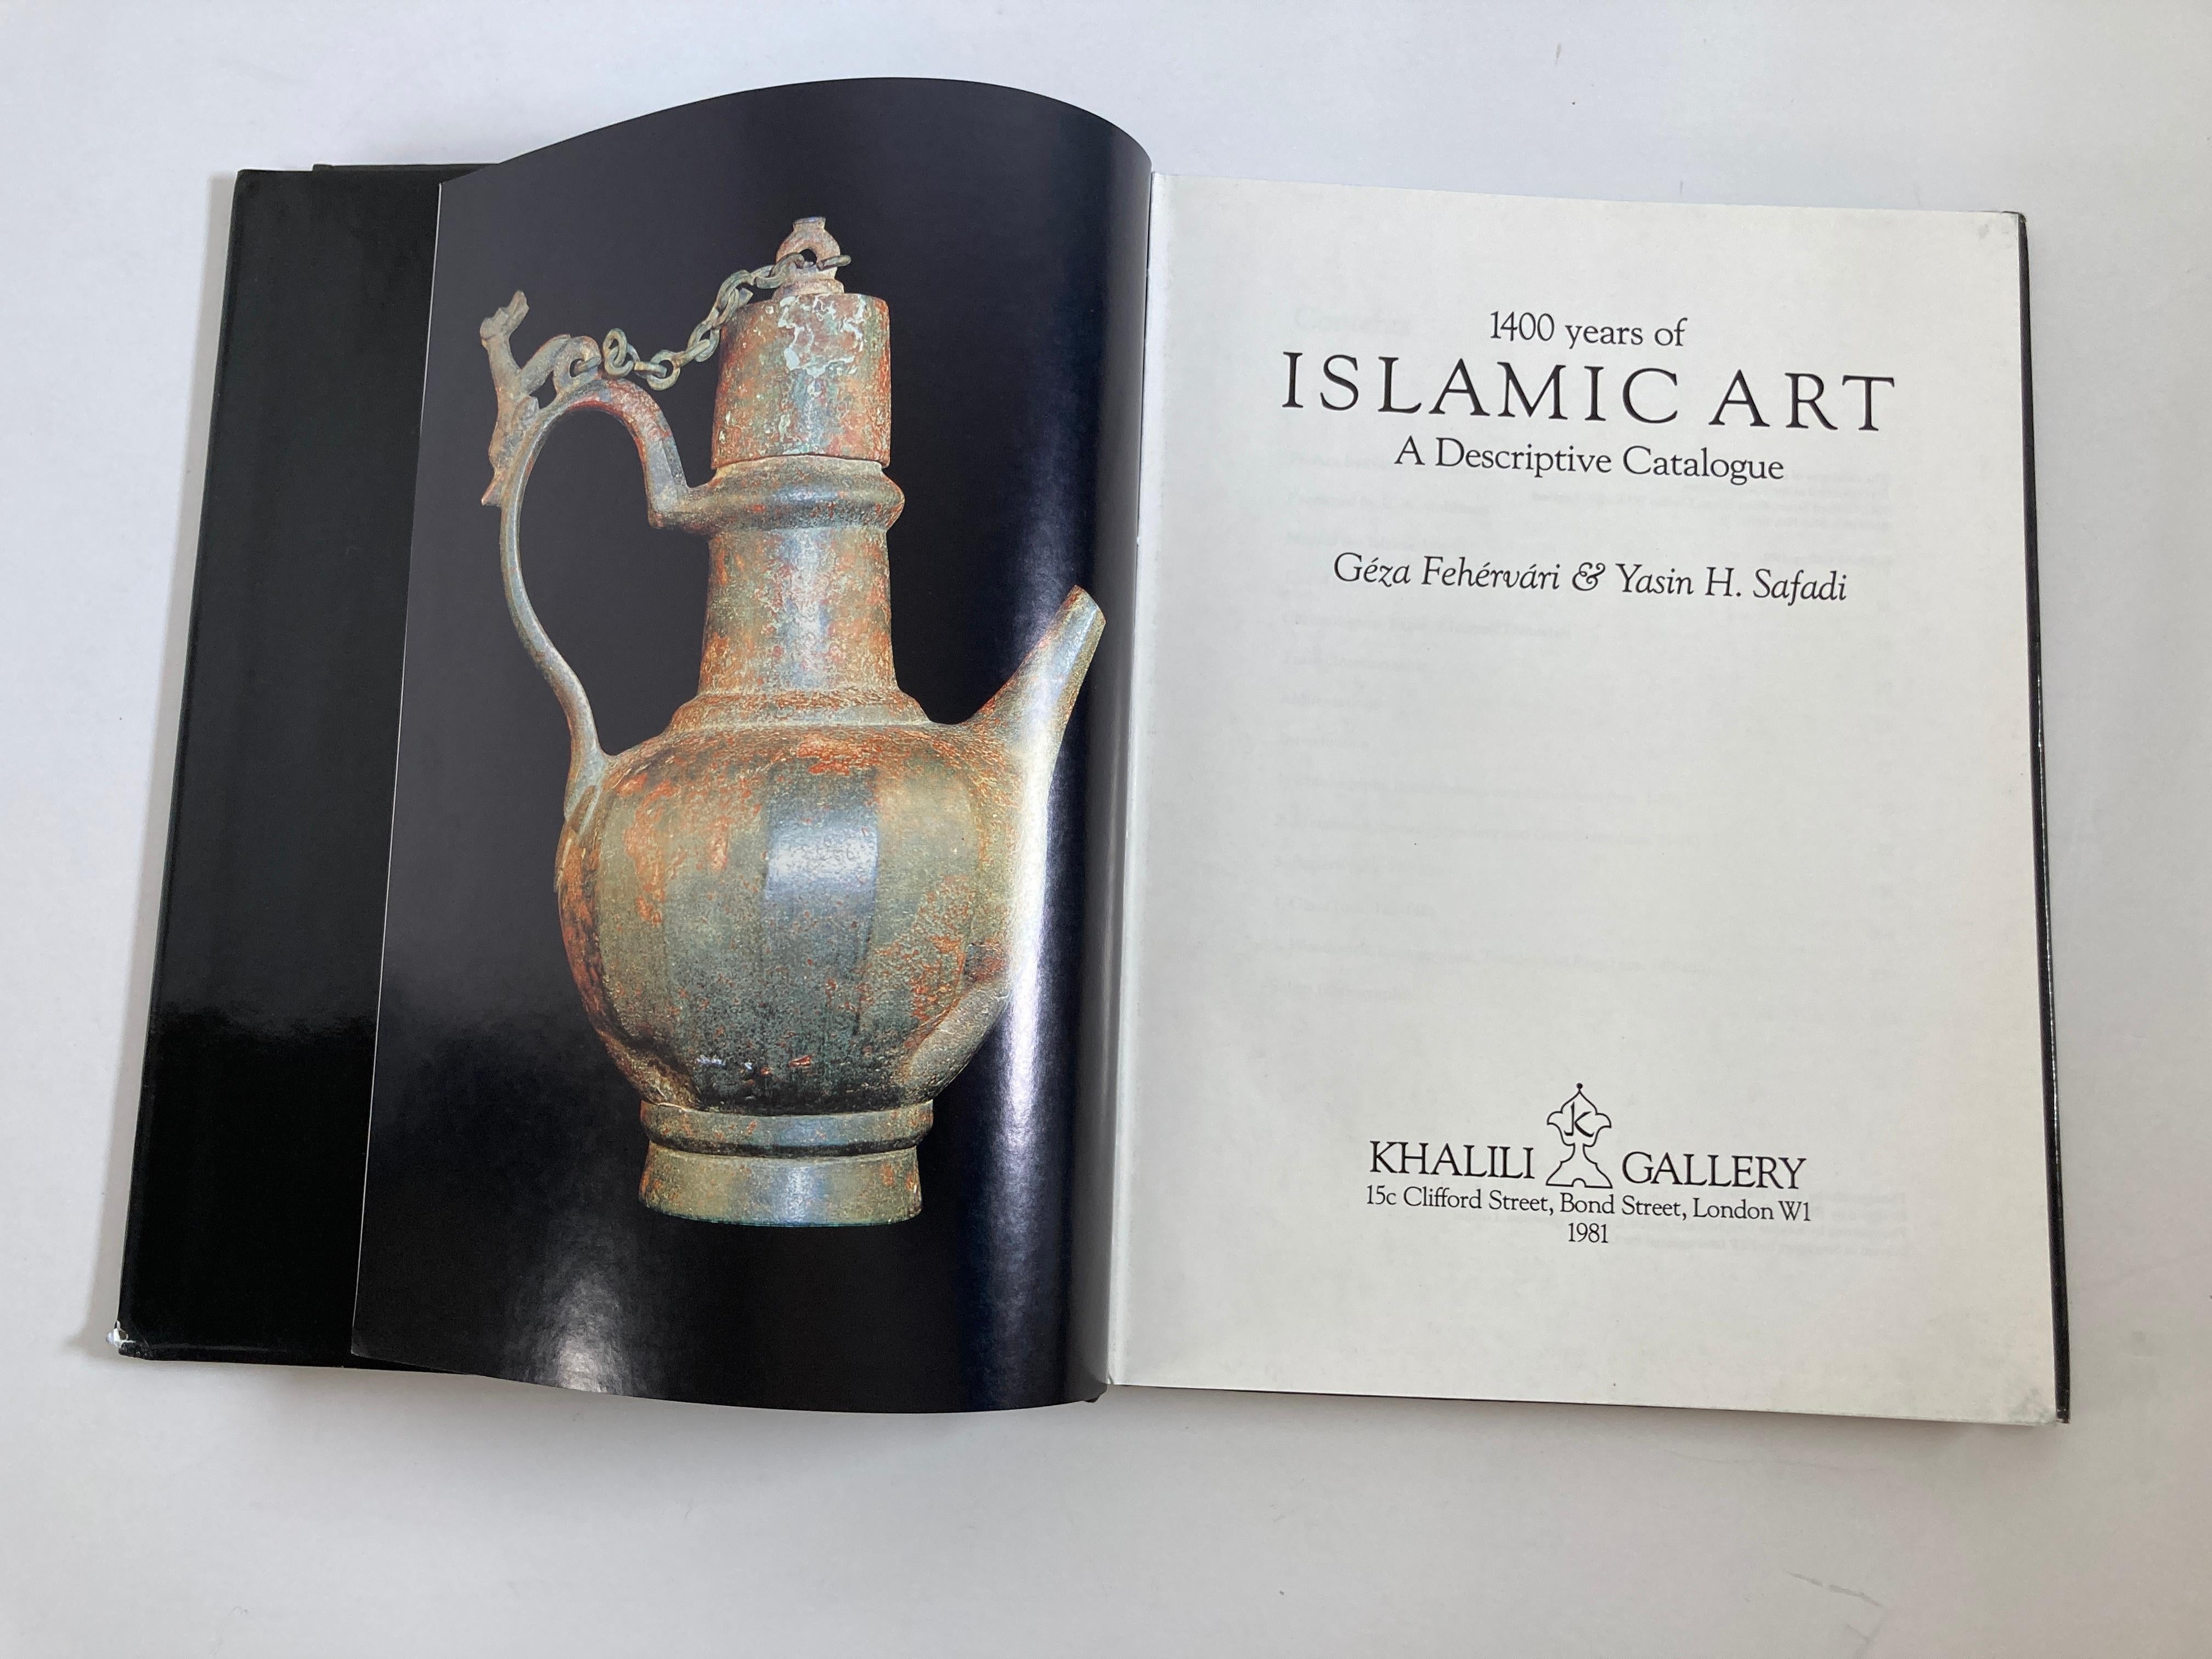 20th Century 1400 Years of Islamic Art a Descriptive Catalogue Hardcover Book